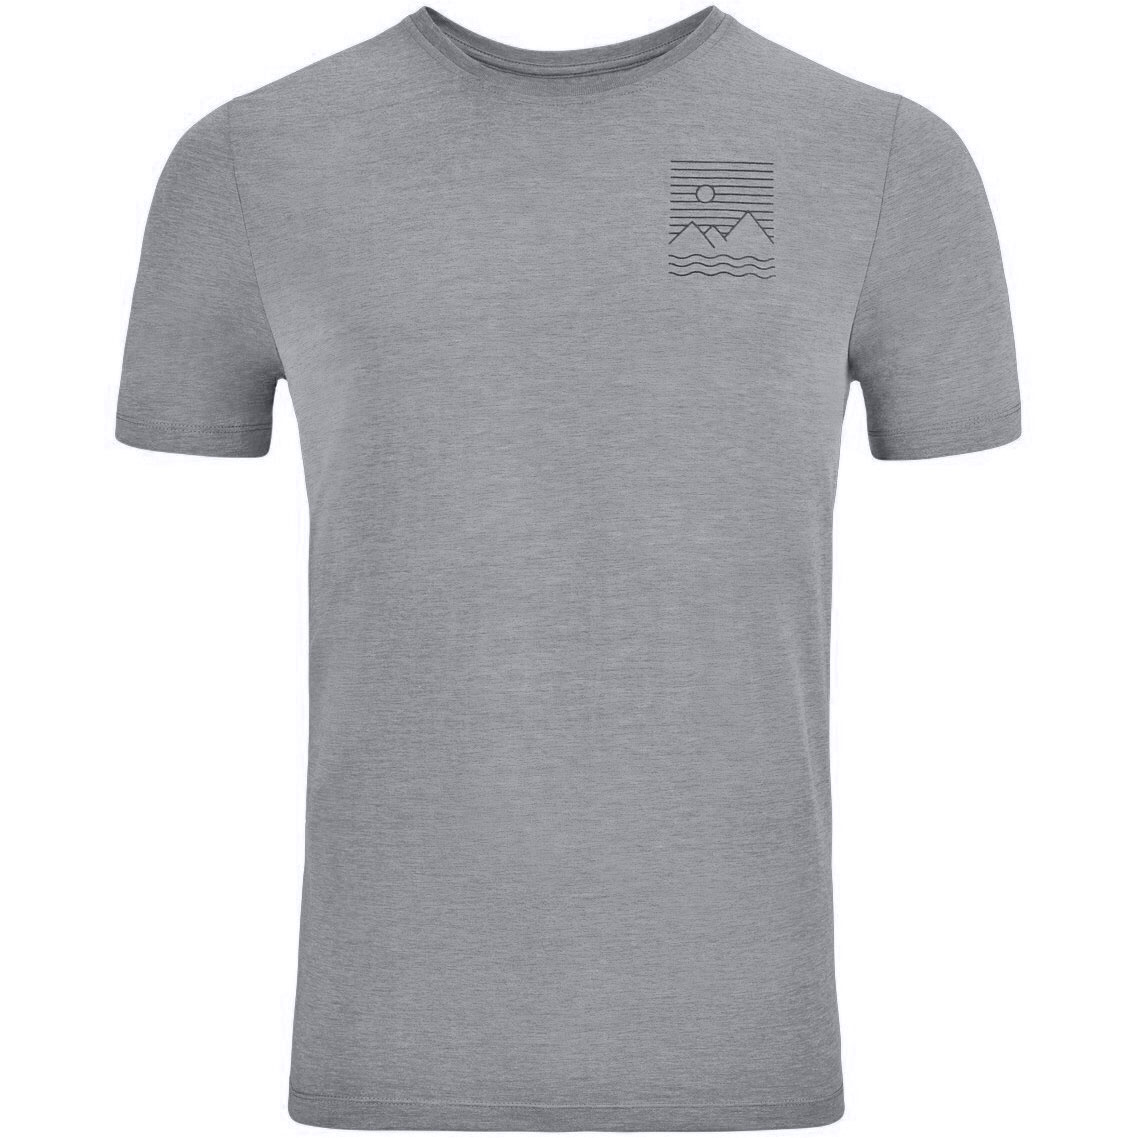 Produktbild von Odlo Ascent 365 T-Shirt mit linearem Landschaftsprint Herren - grey melange